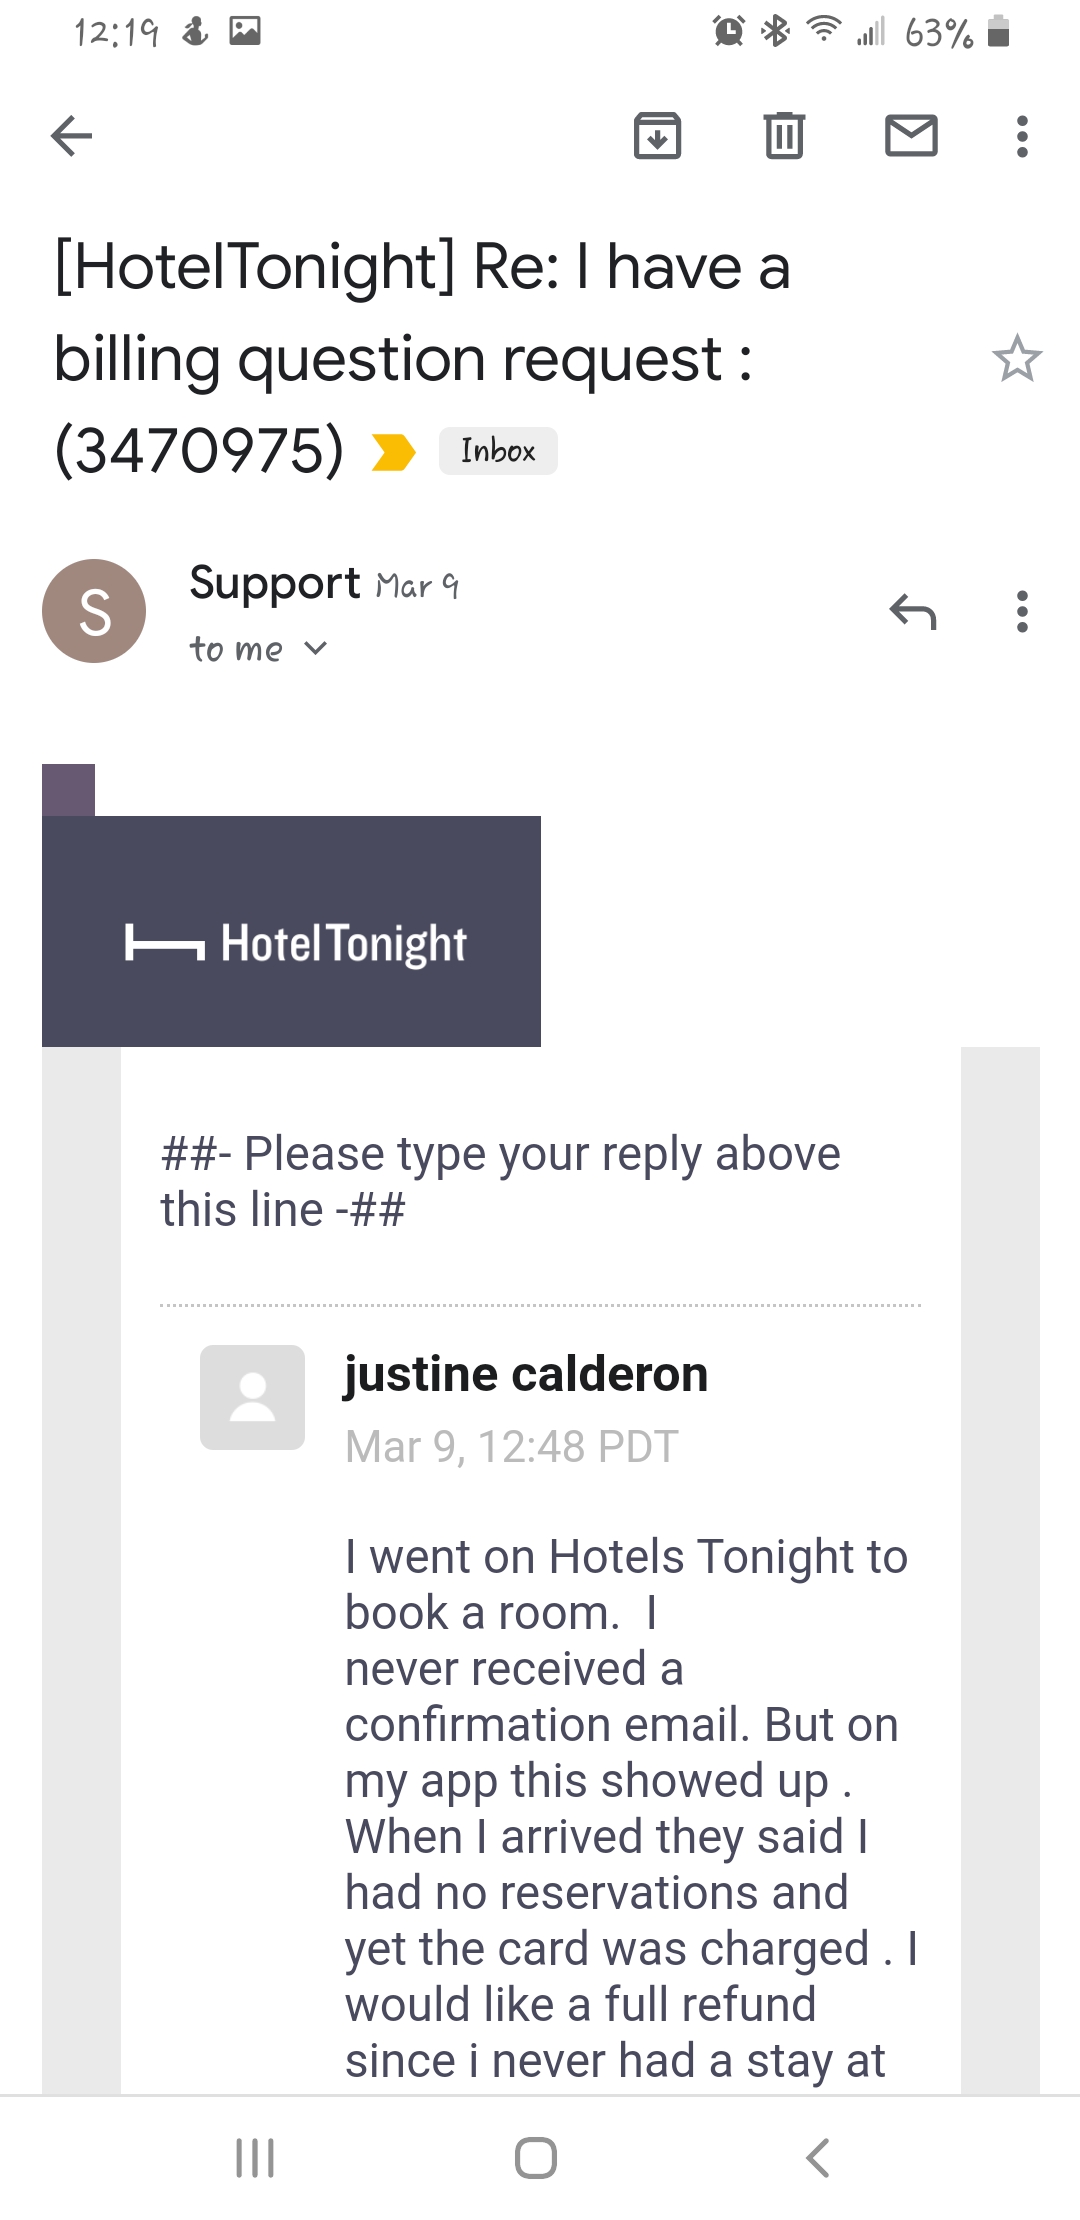 Hotel tonight login